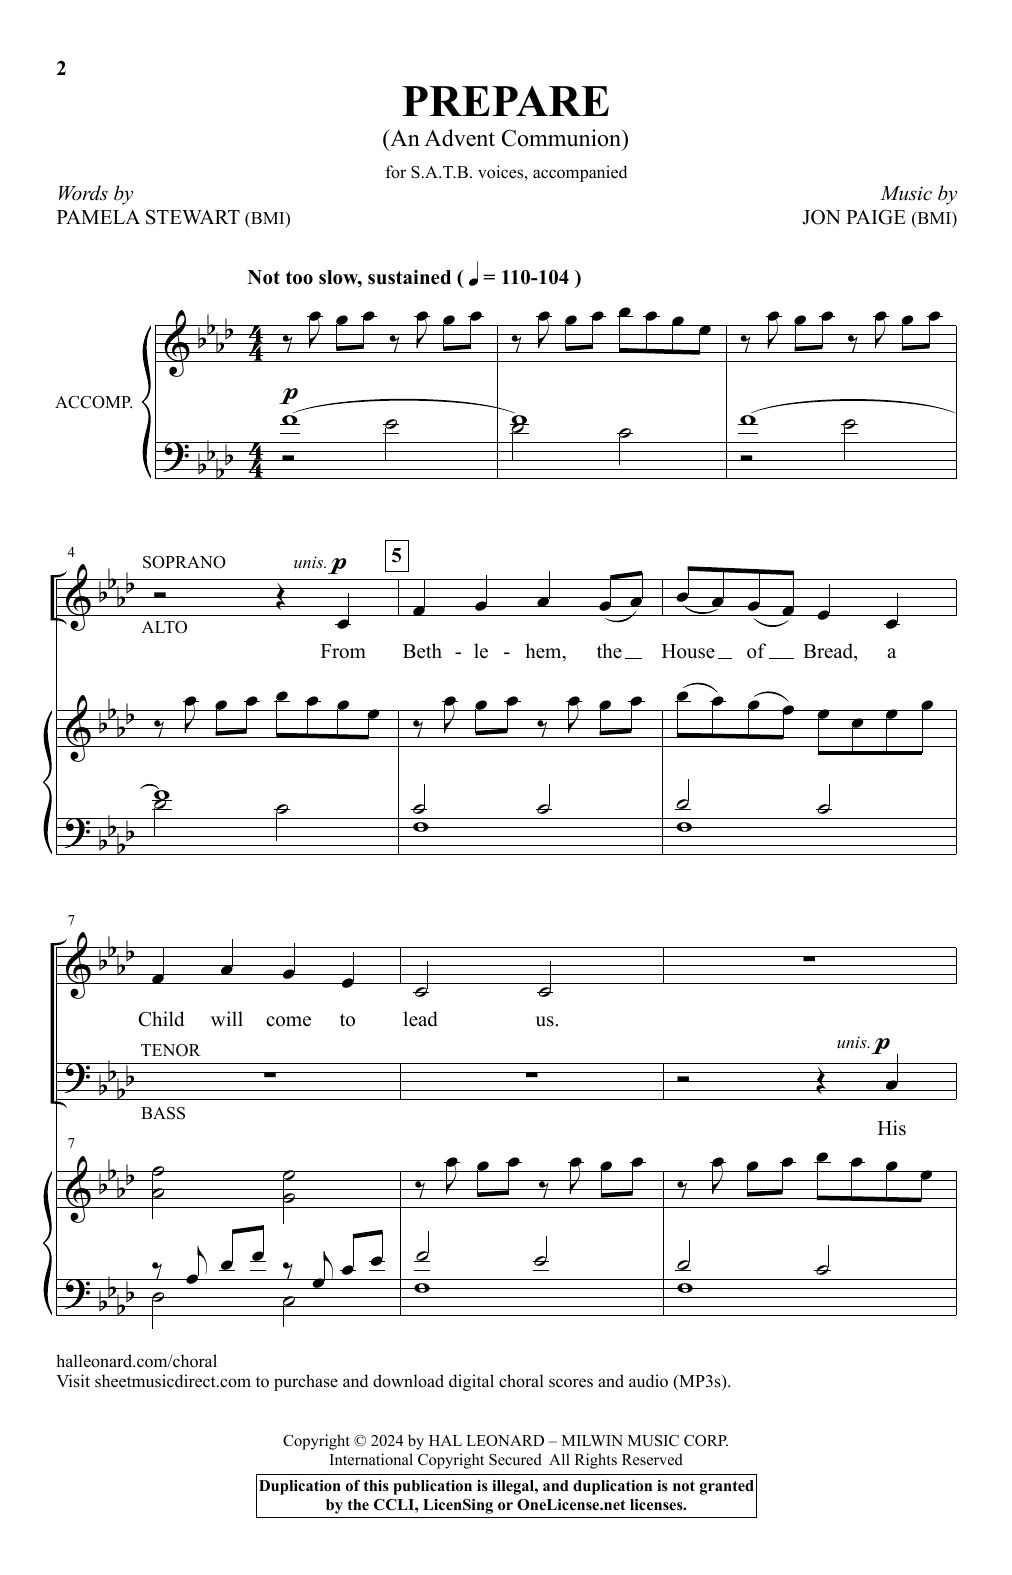 Jon Paige Prepare (An Advent Communion) sheet music notes and chords arranged for SATB Choir